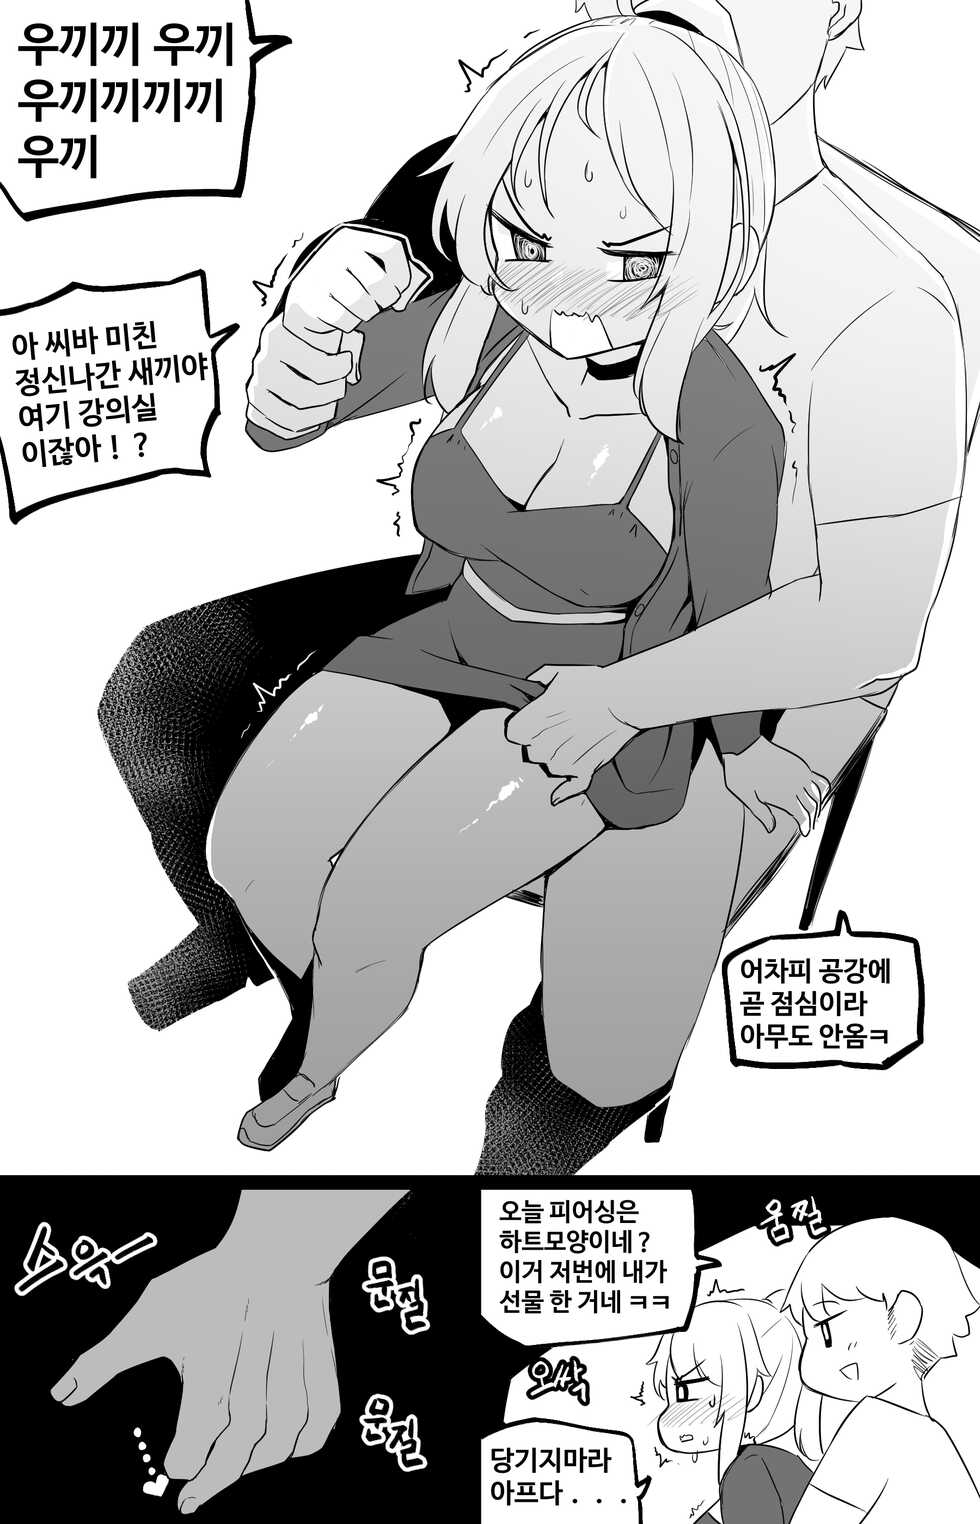 (mangmoongming)세상에서 가장 빠꾸 없는 남여사친(pixiv) - Page 8